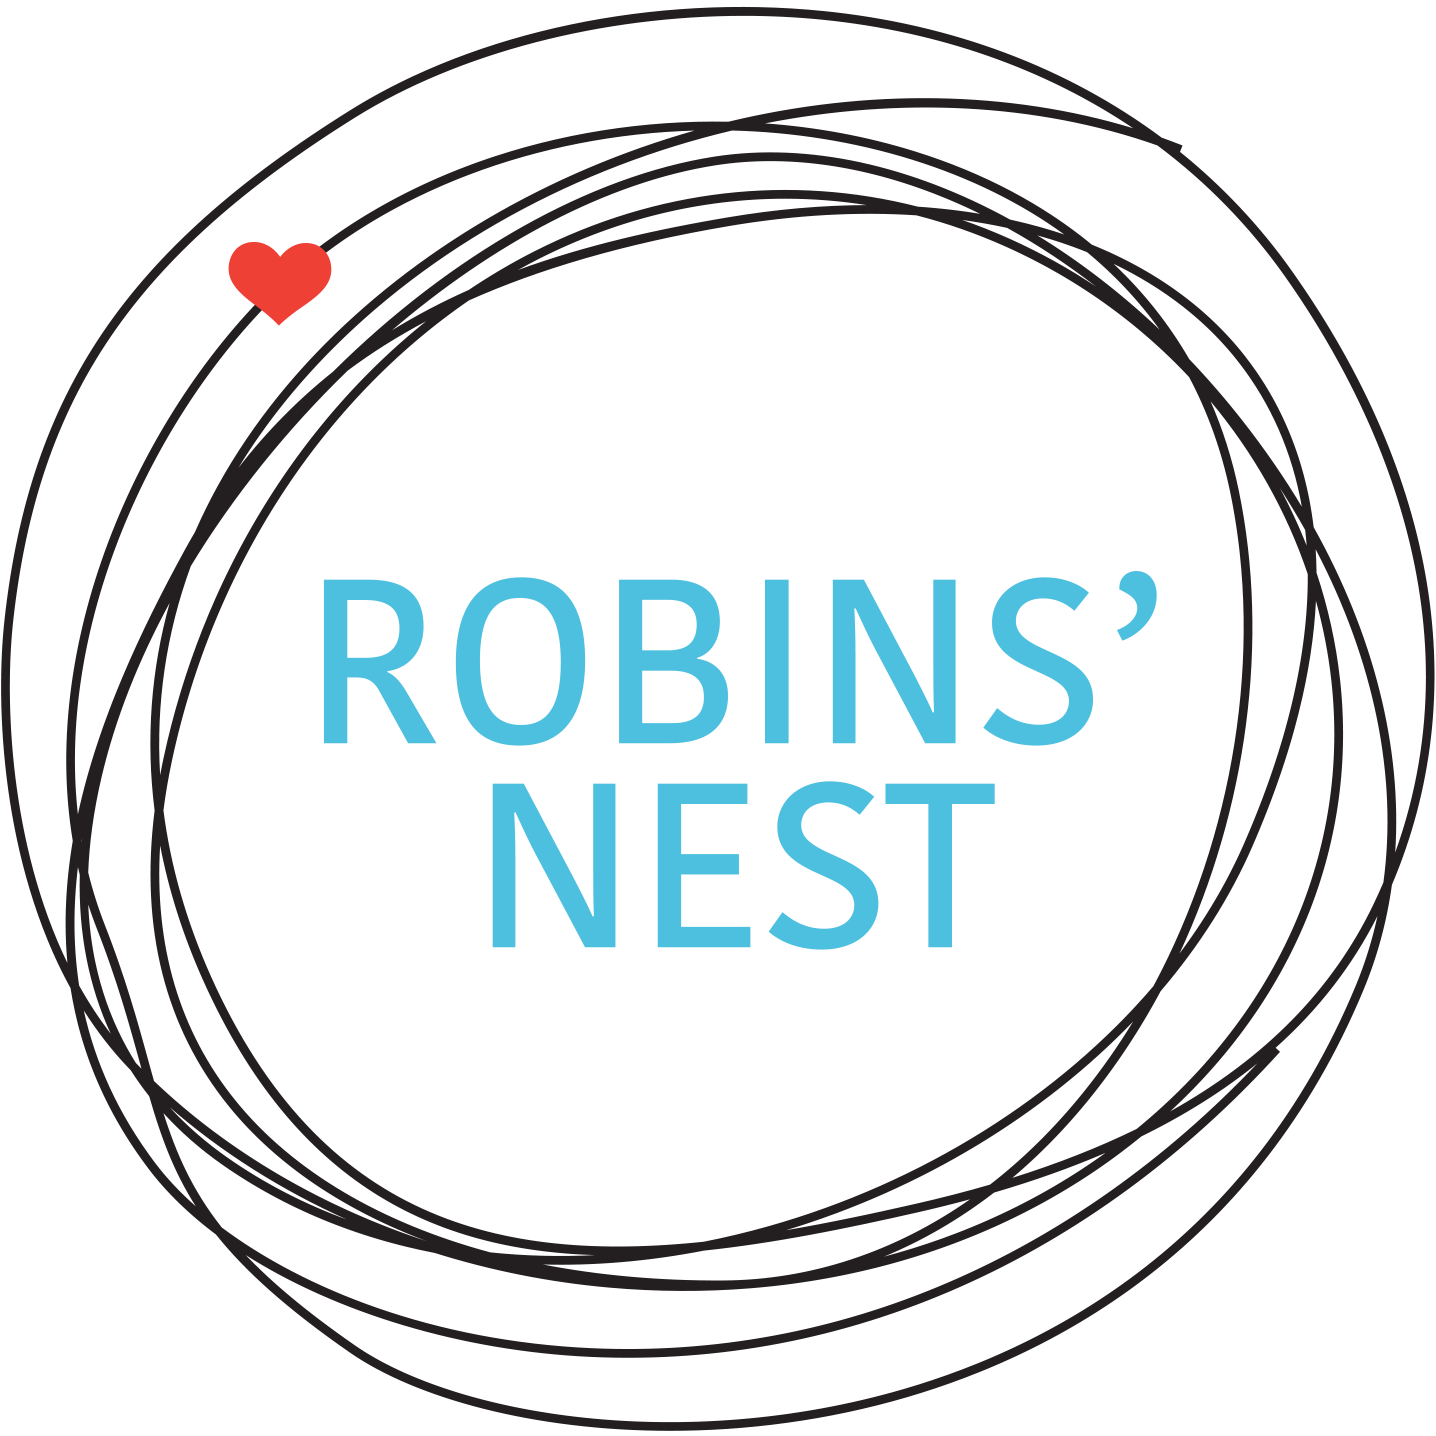 nest clipart robins nest